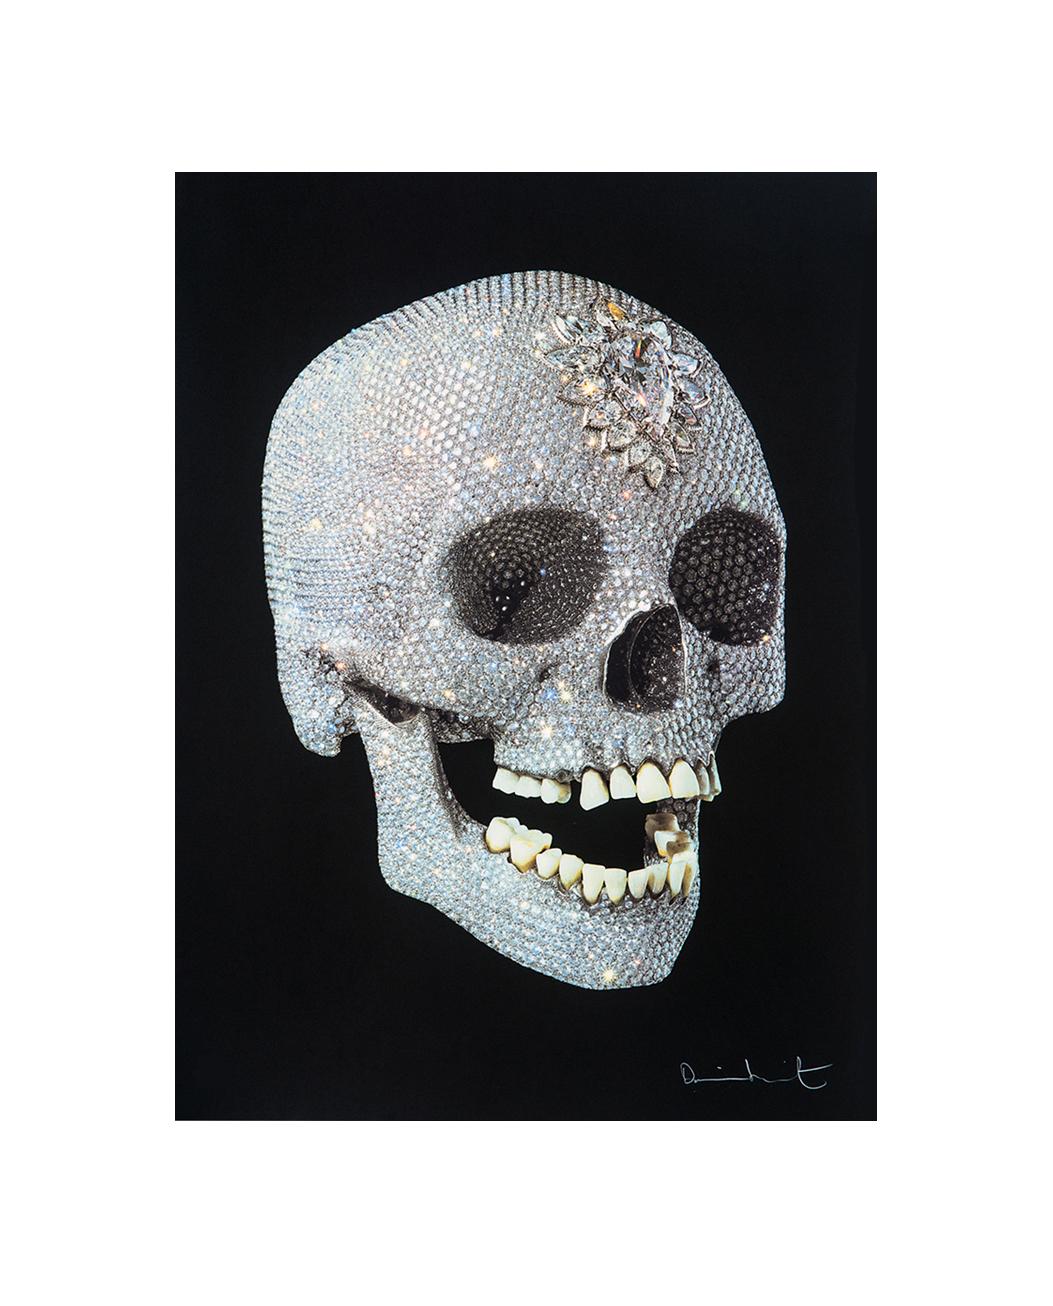 Damien Hirst Portrait Print - For the Love of God, the Diamond Skull 